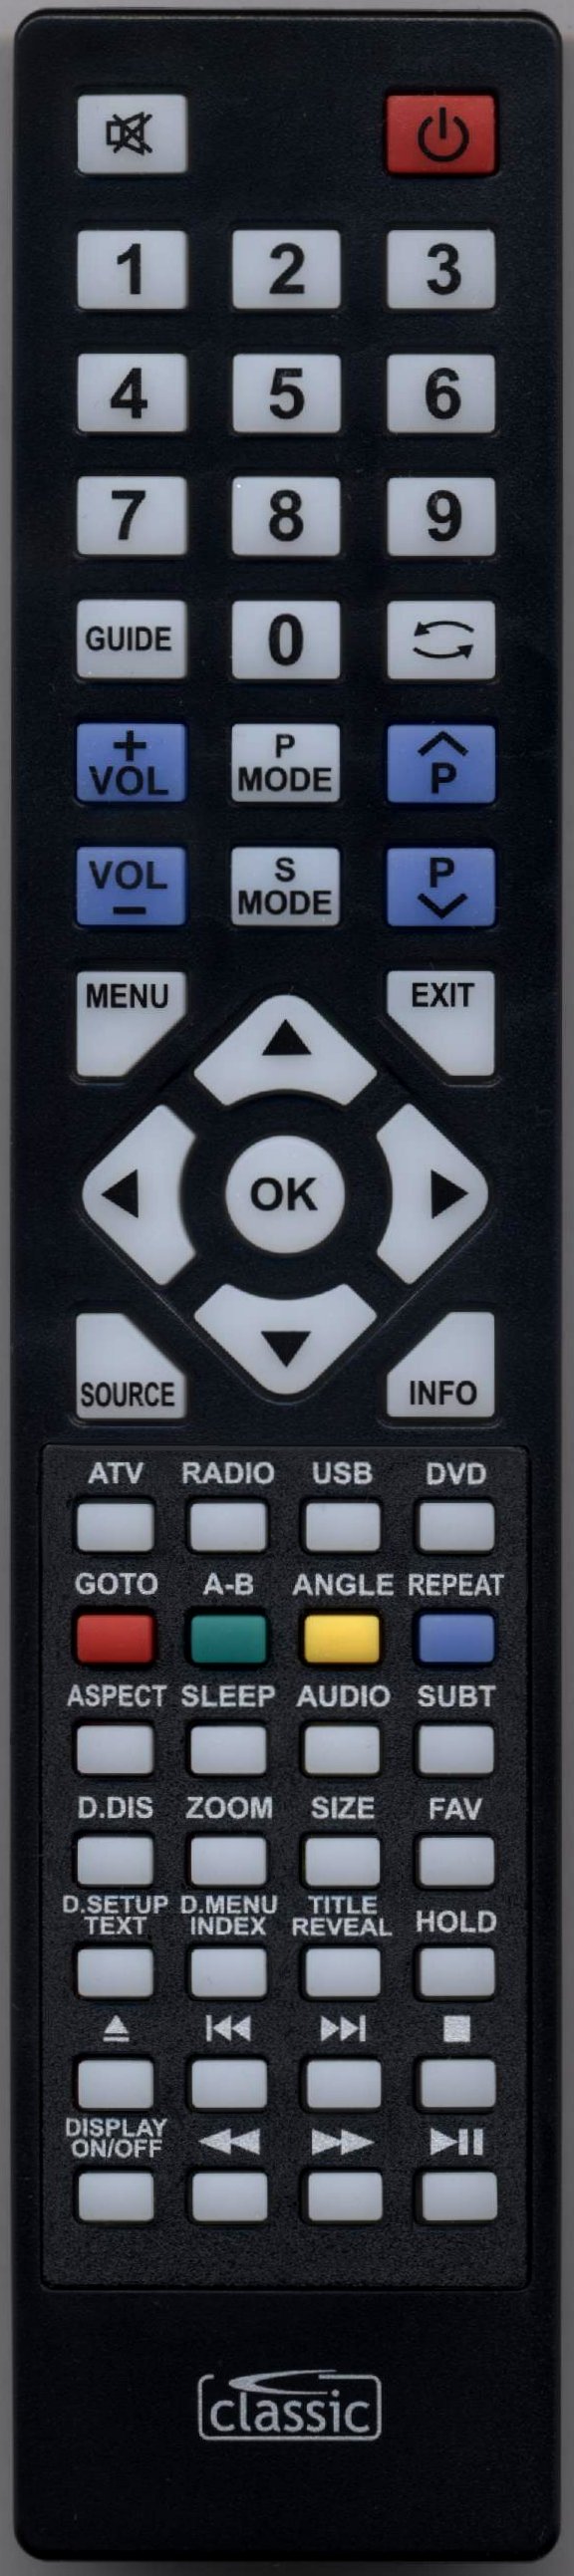 UMC - W185/55G Alternative Remote Control